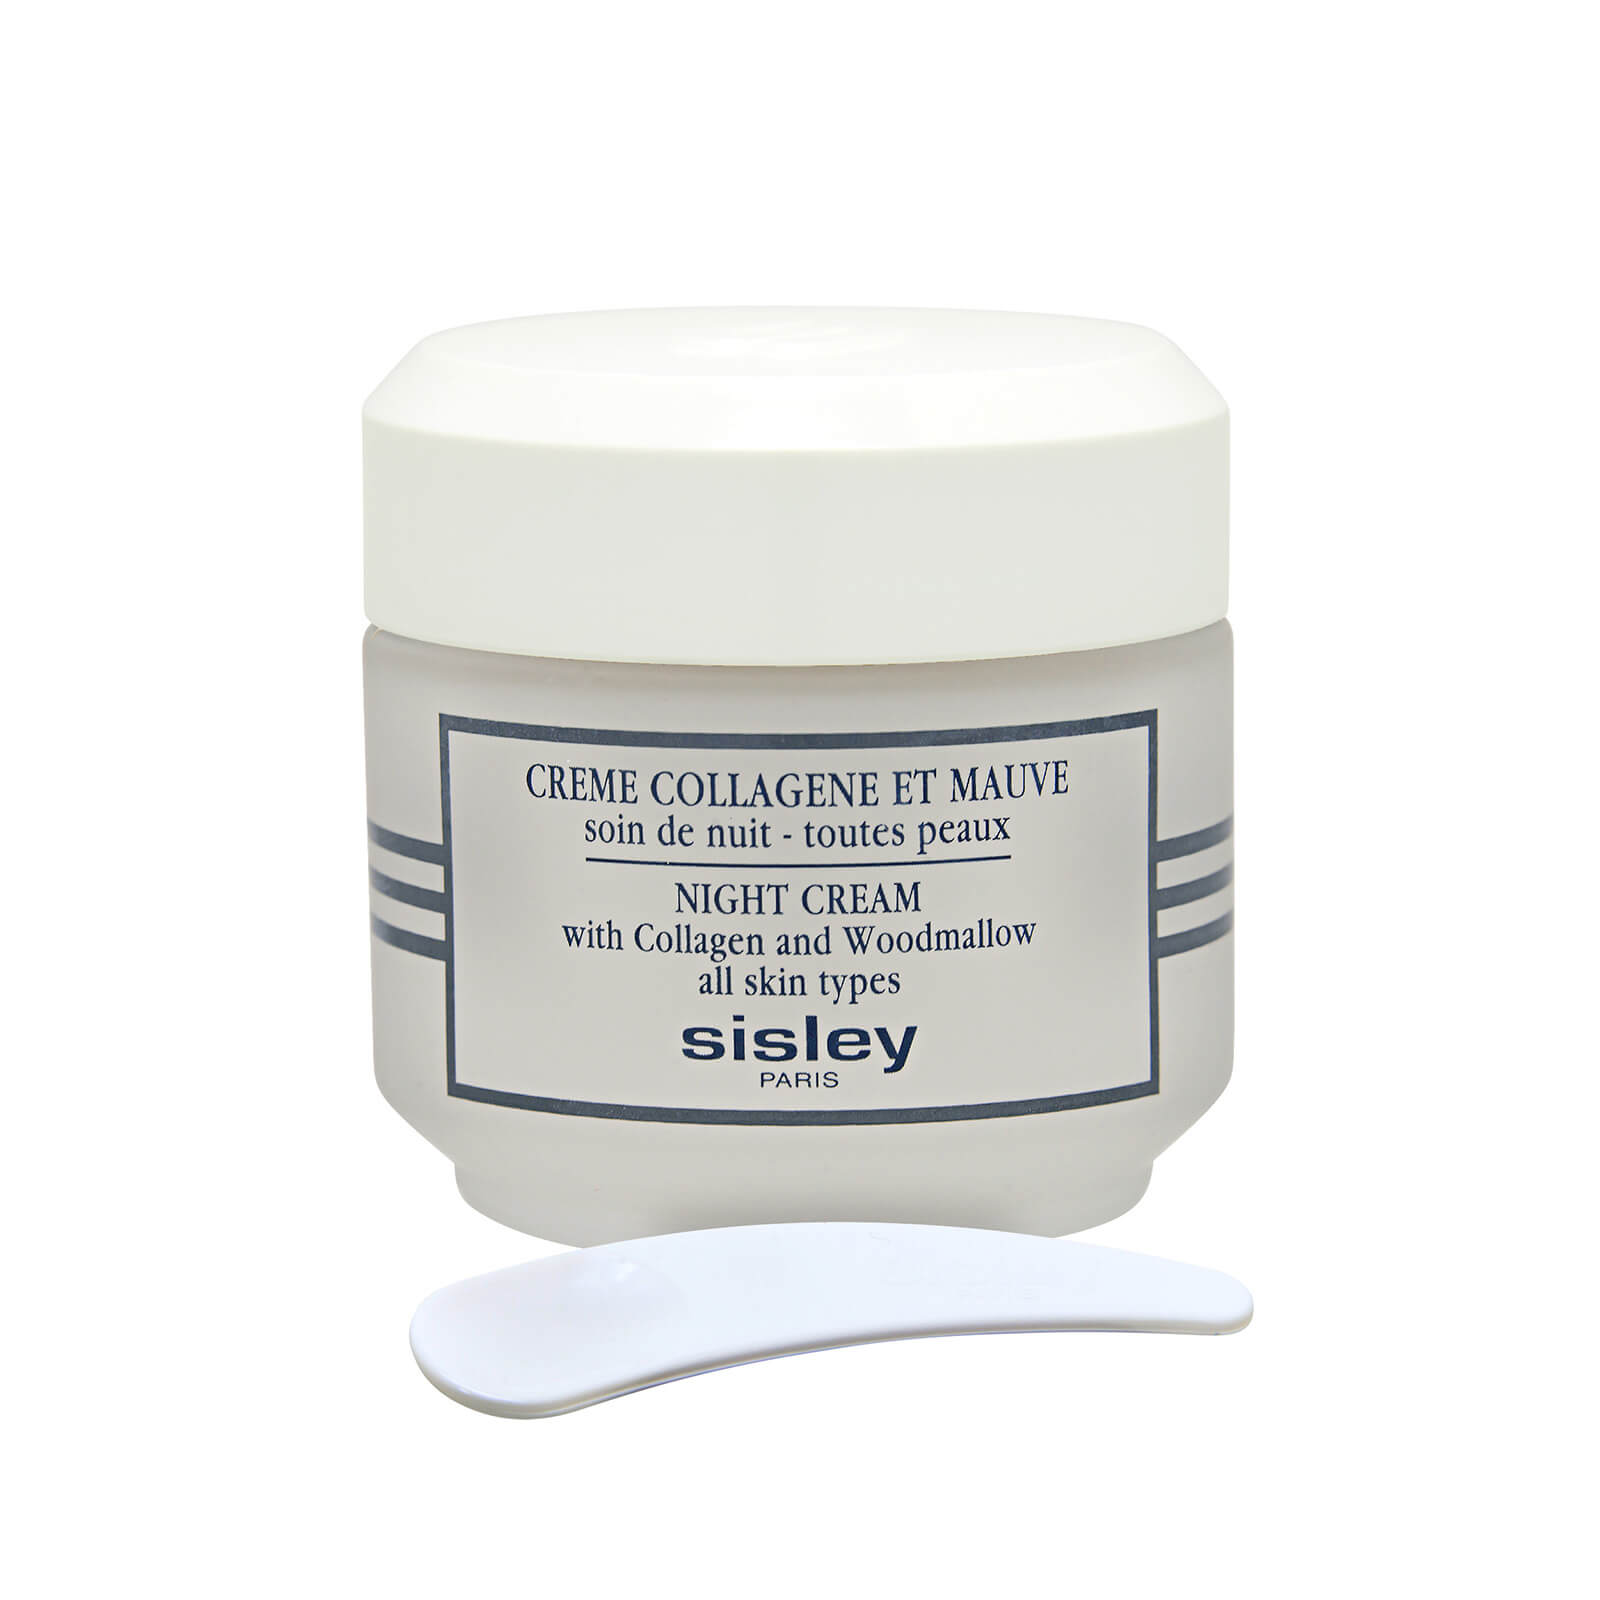 Sisley Night Cream with Collagen & Woodmallow50 ml 1.6 oz kalista Beauty